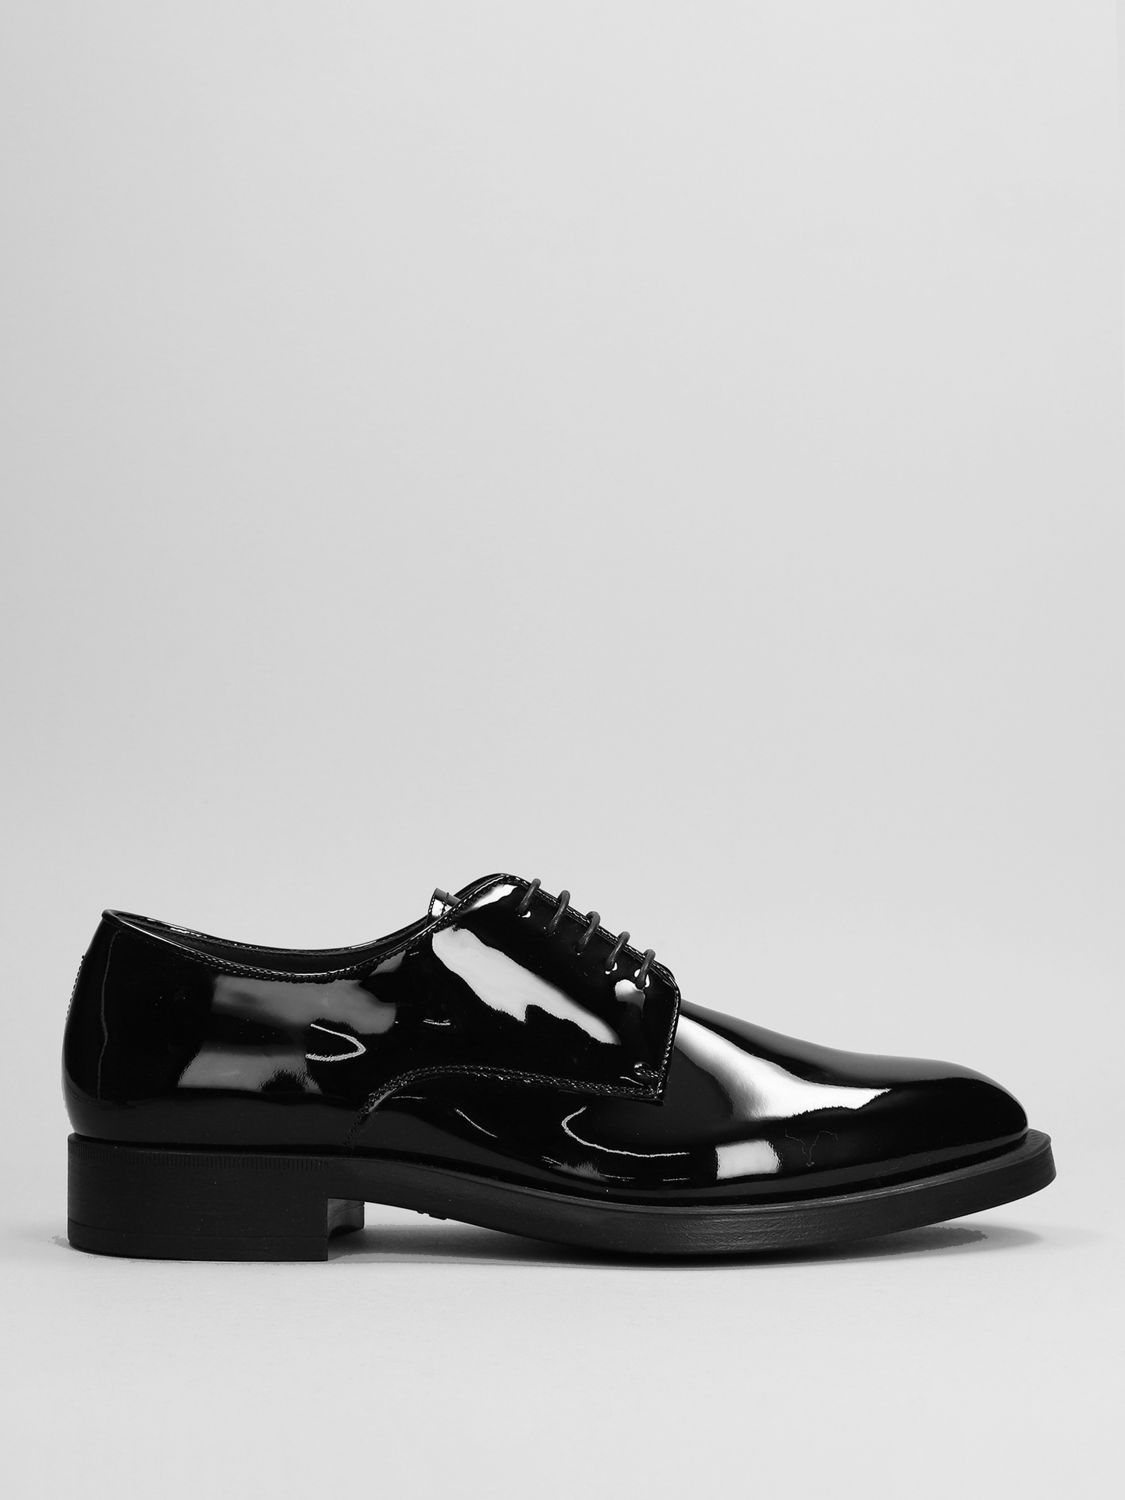 lekken Categorie Geniet GIORGIO ARMANI: brogue shoes for man - Black | Giorgio Armani brogue shoes  X2C679XAT24 online on GIGLIO.COM